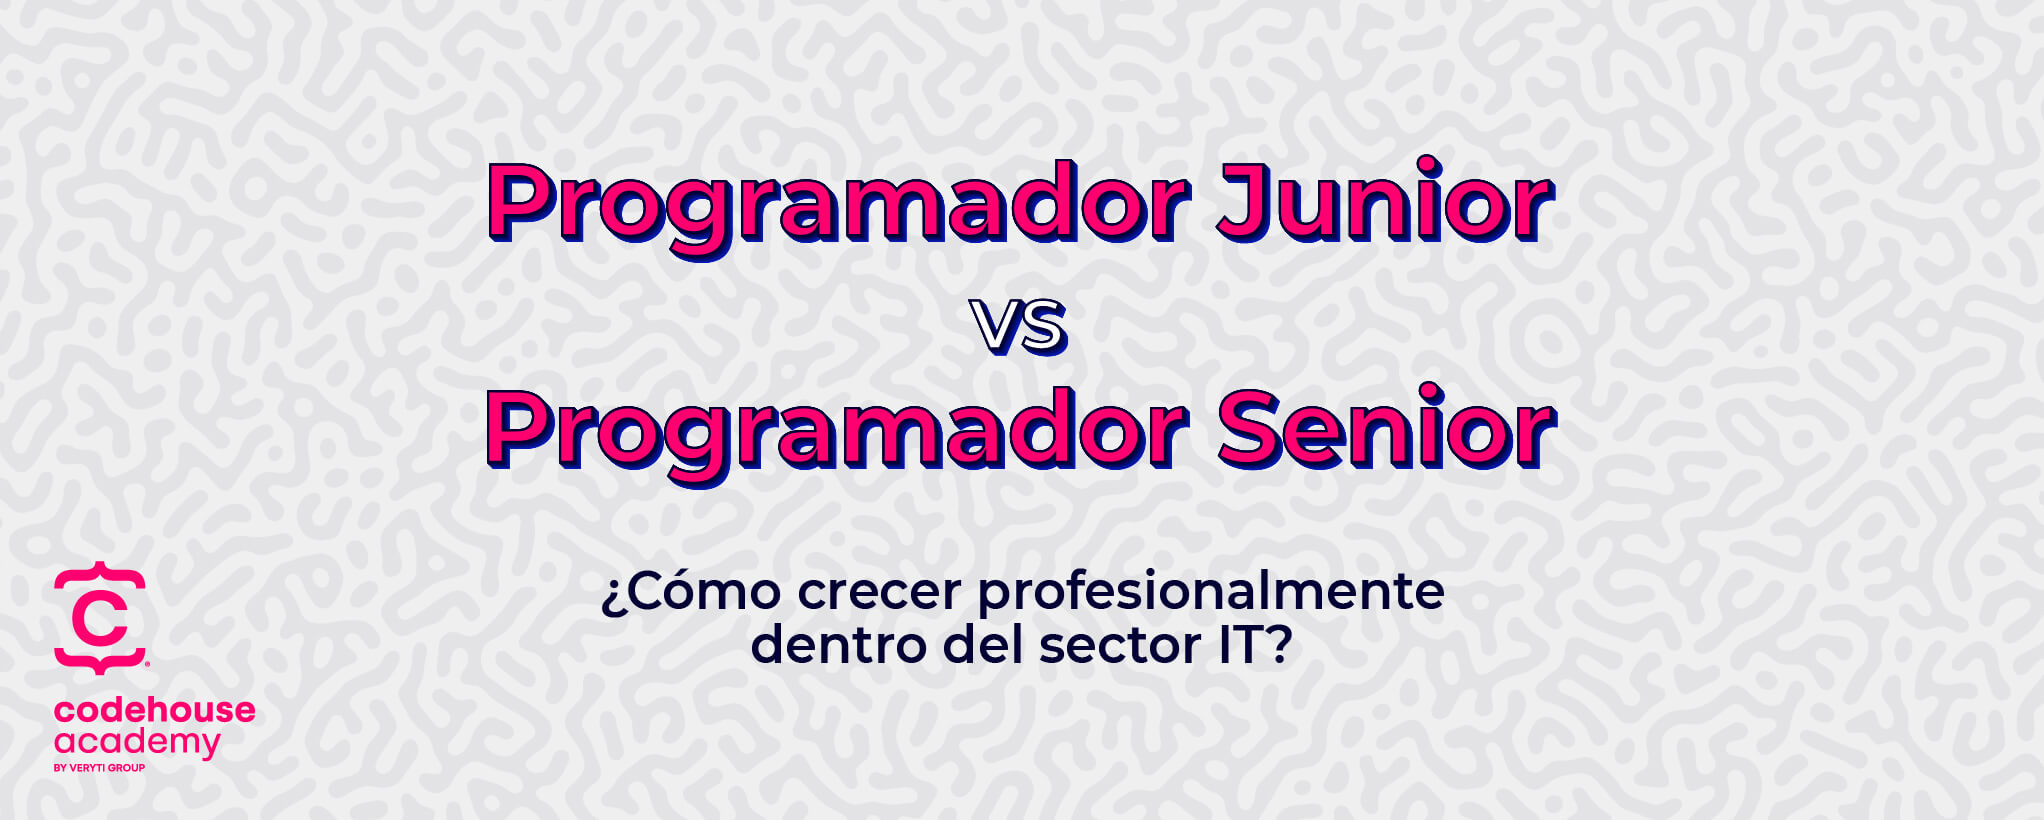 programador junior vs senior